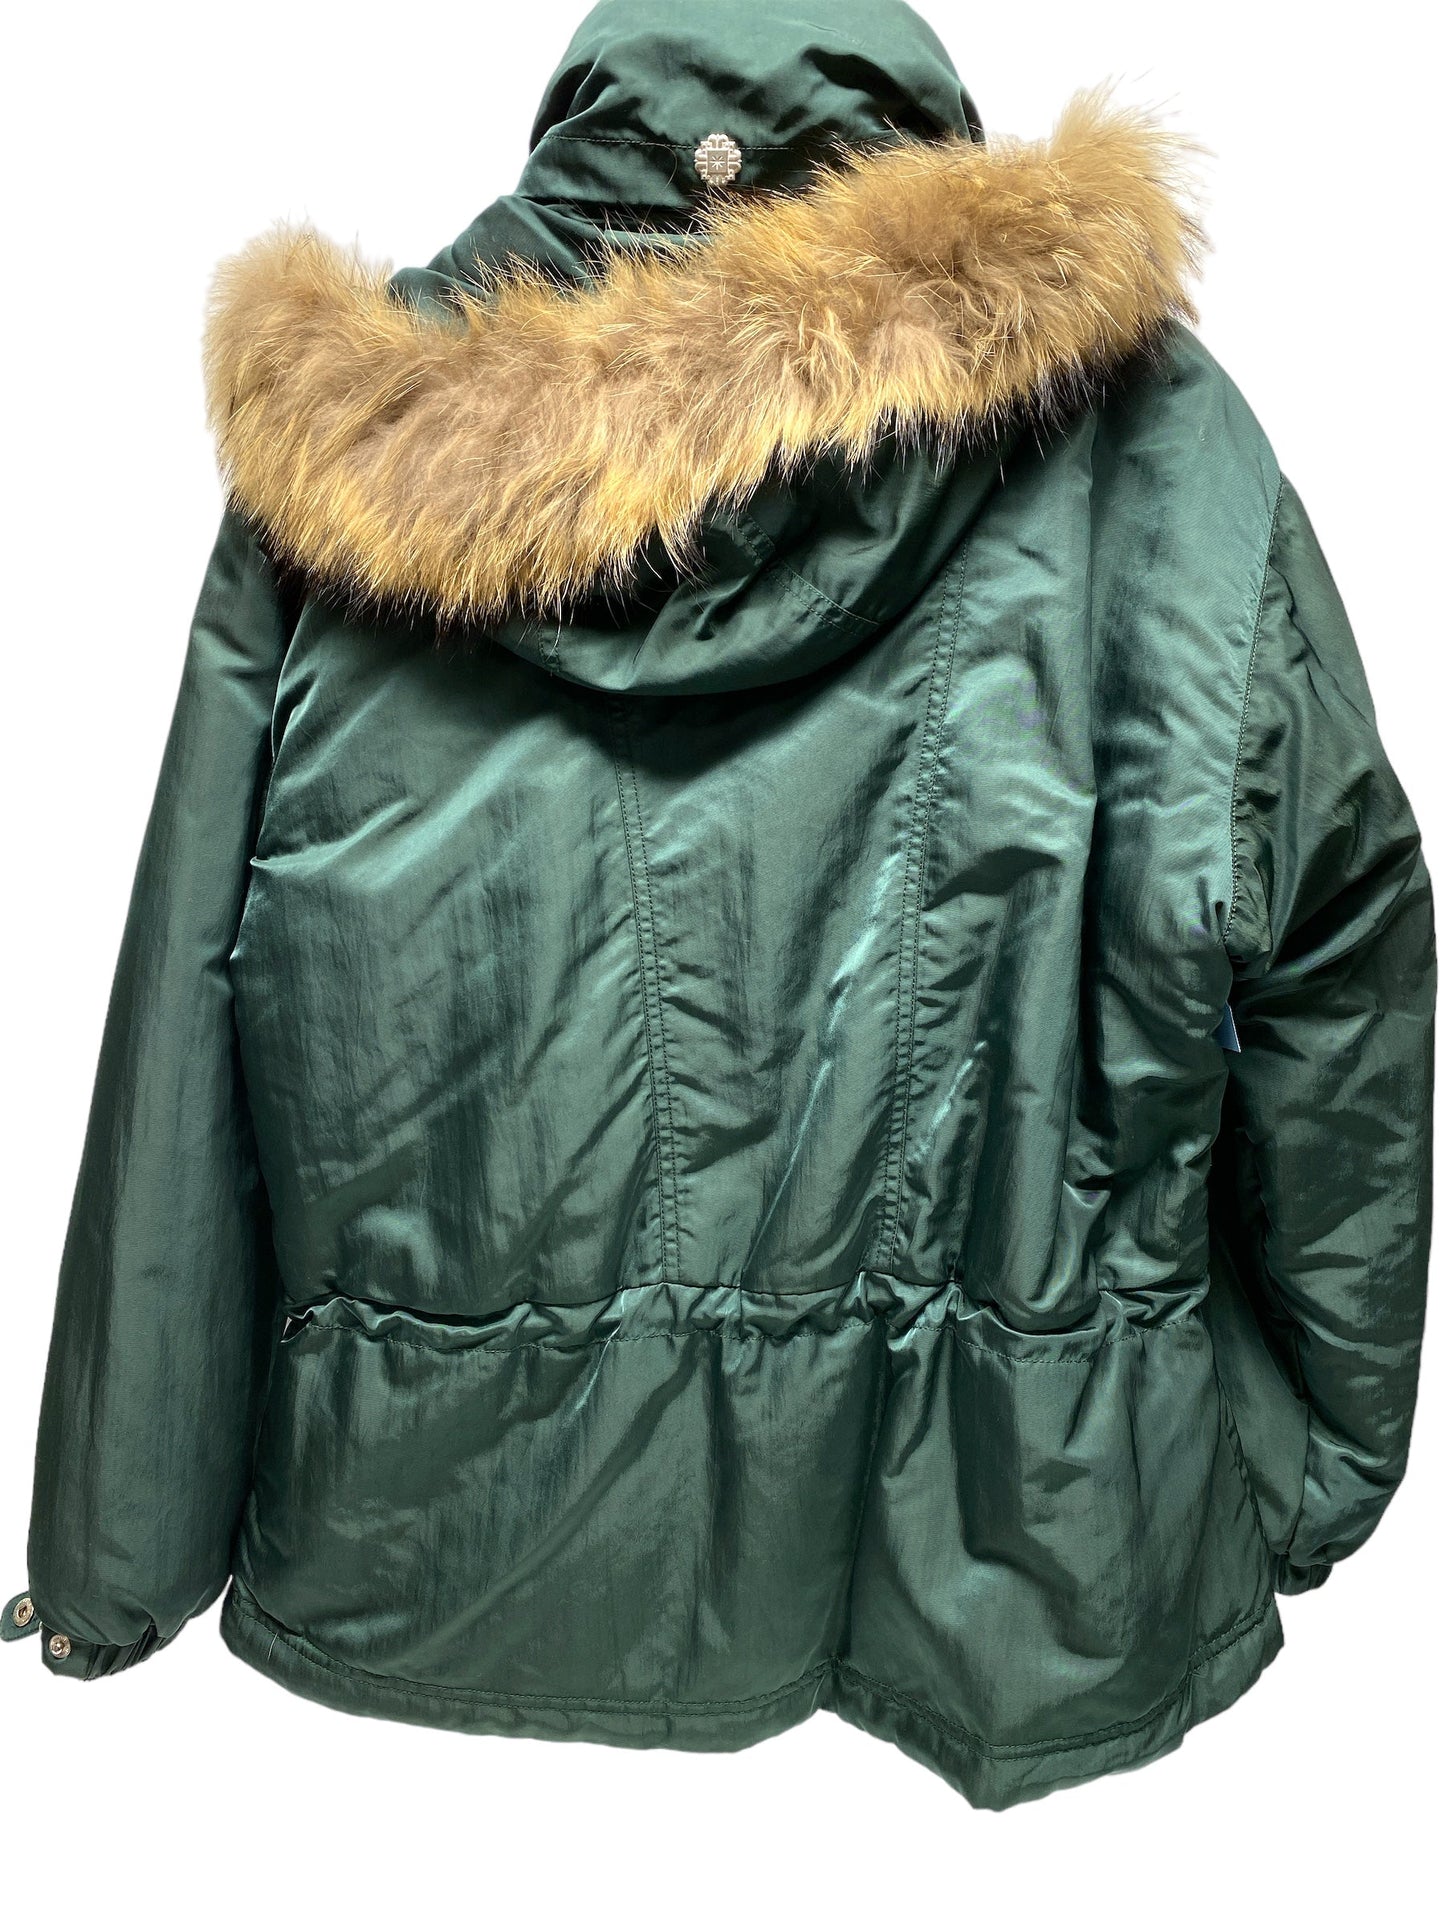 Coat Parka By Nils Skiwear Size: 14